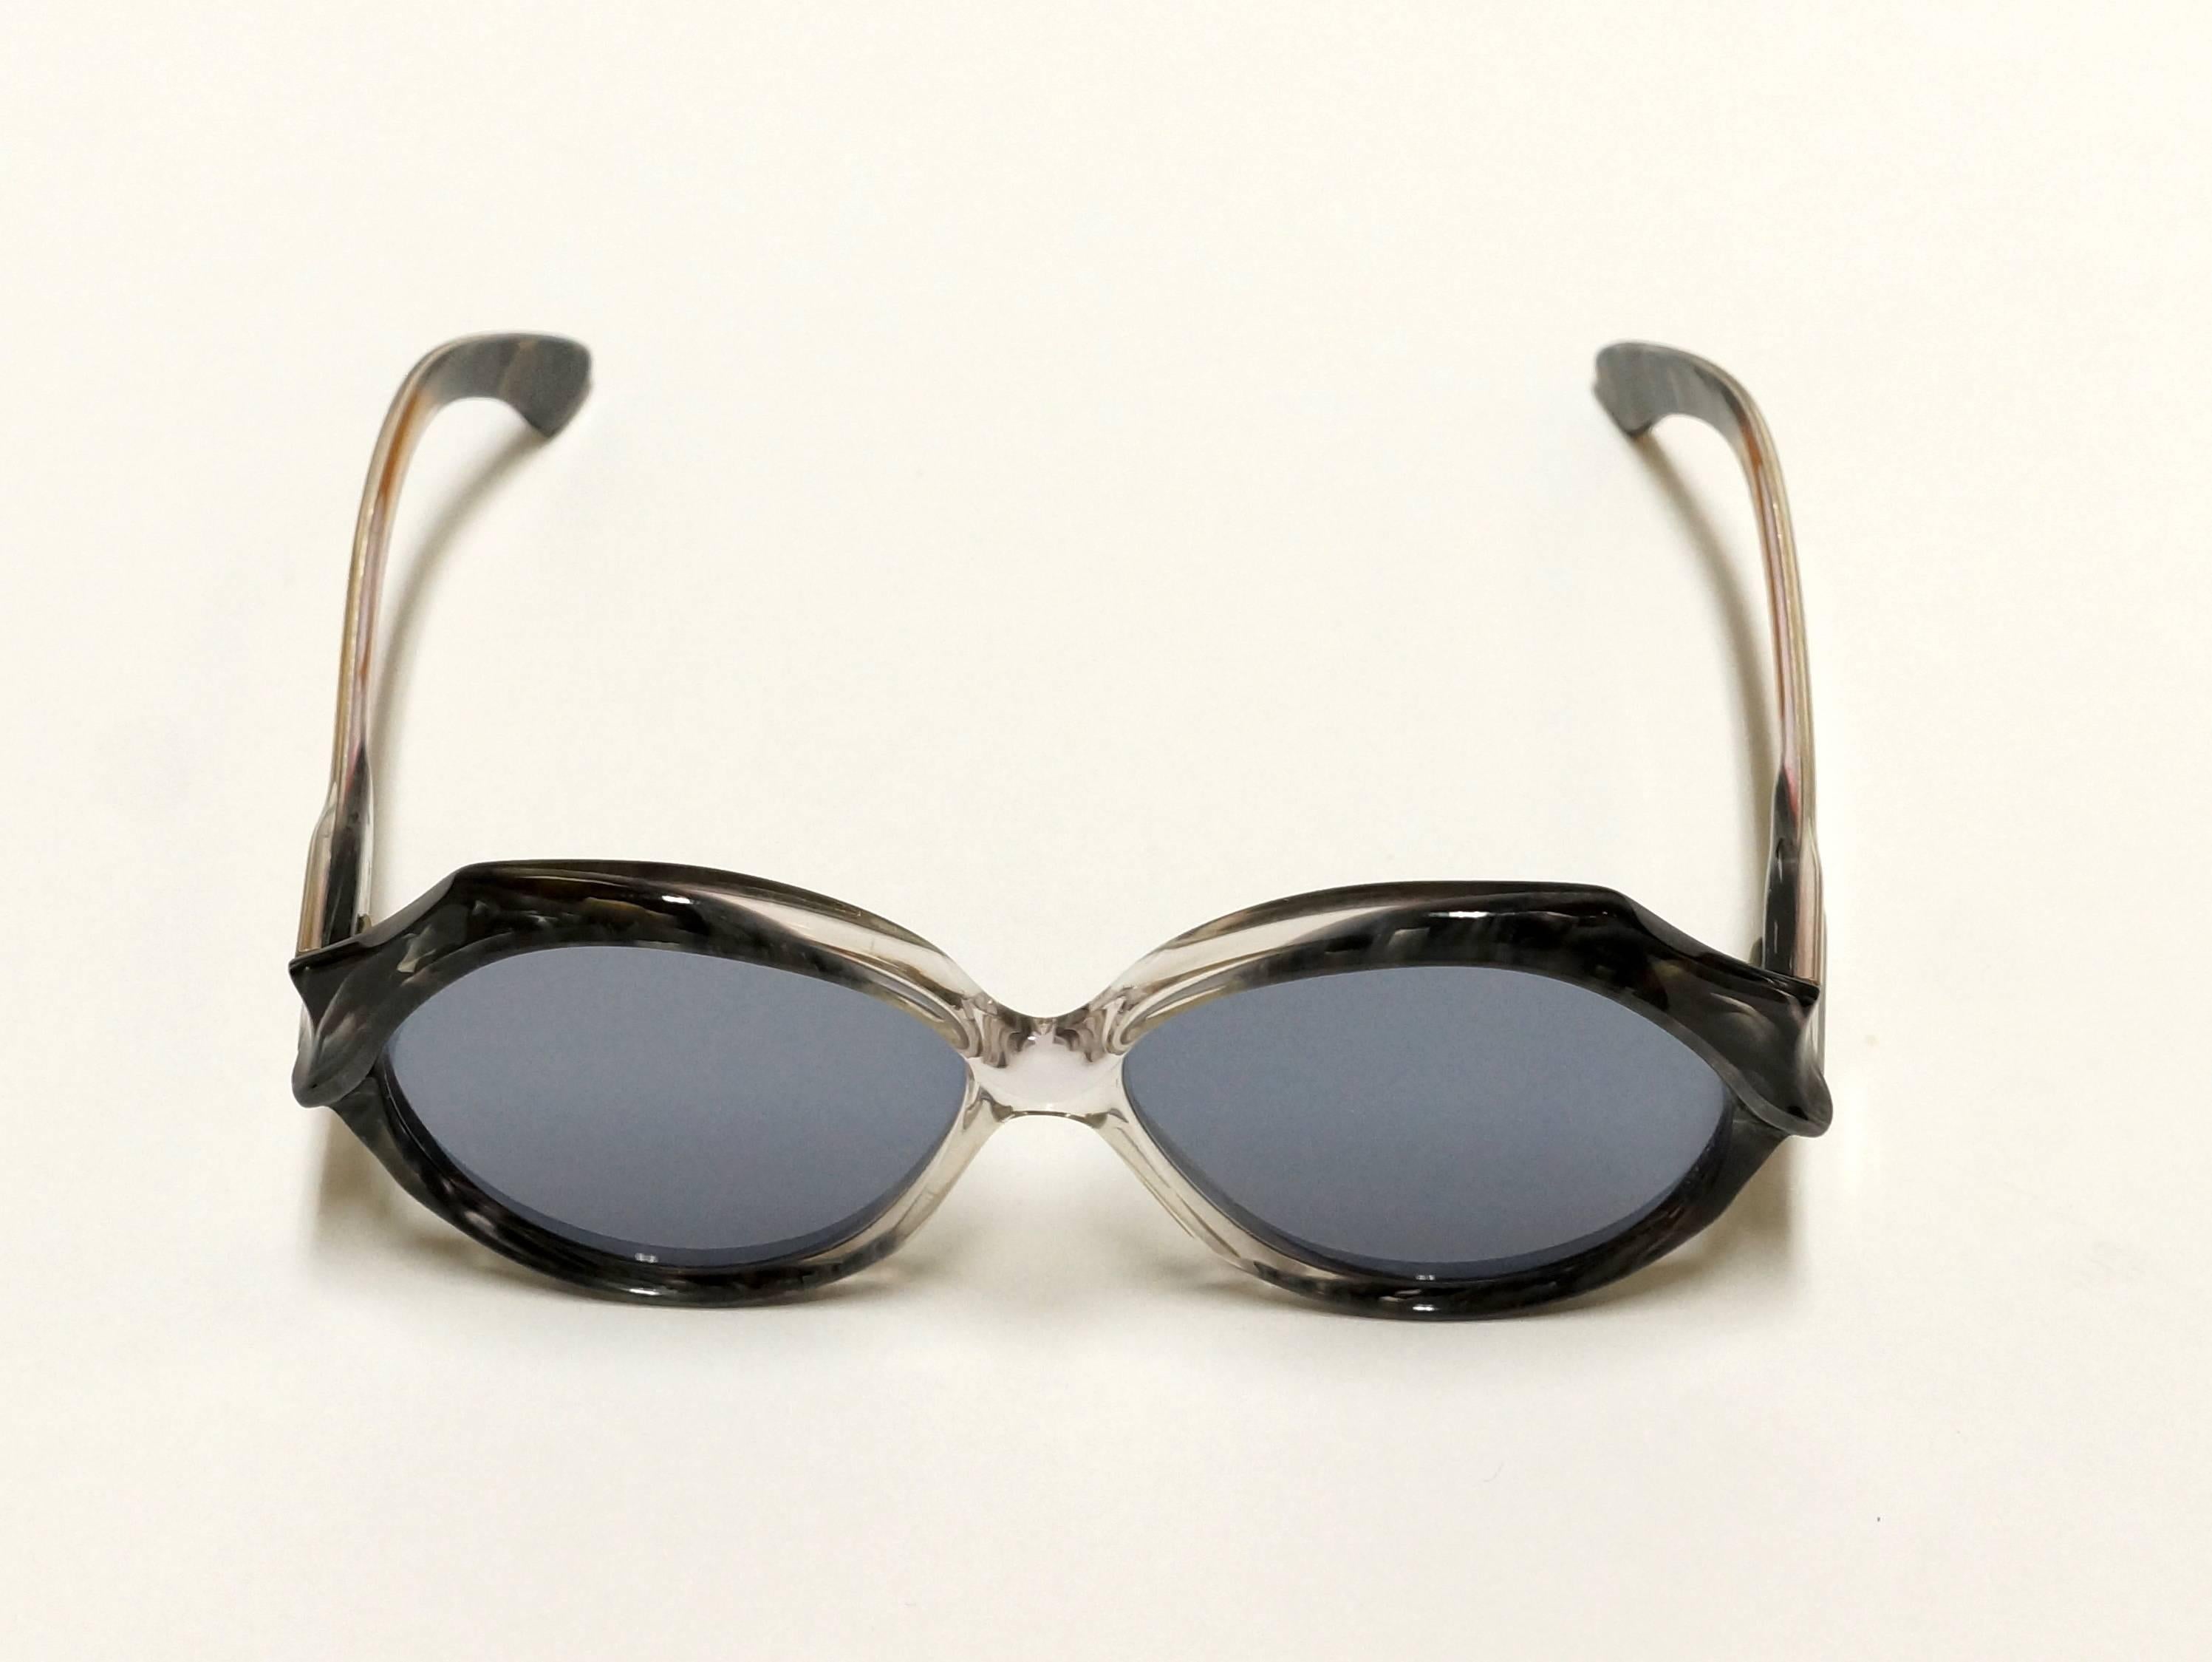 70s French Vintage Sunglasses by Jacques Fath - model Esterel/7  For Sale 6